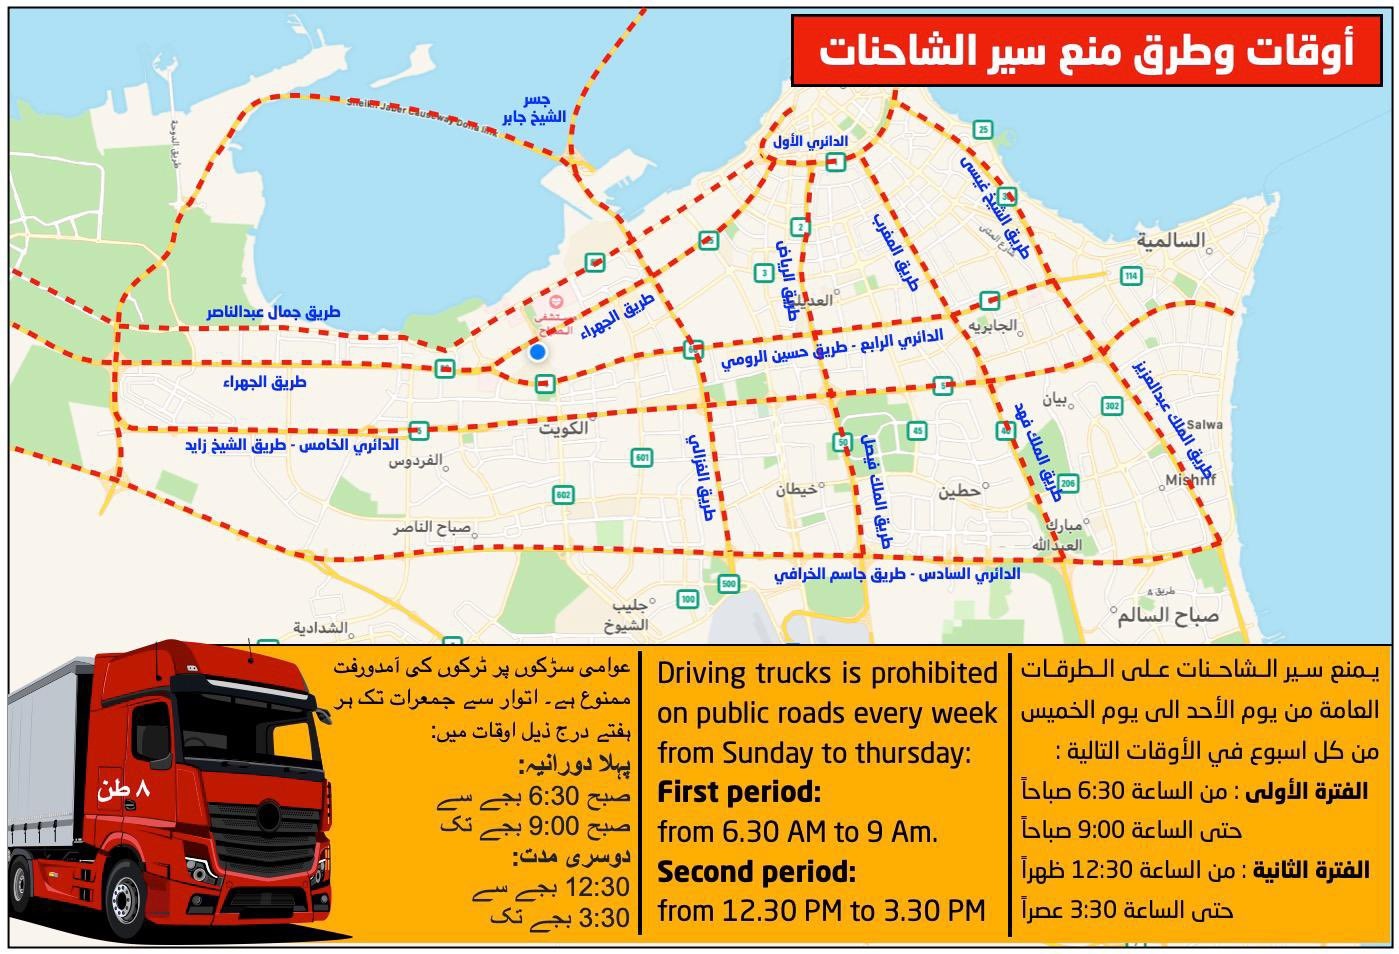 MoI set times for trucks ban on public roads